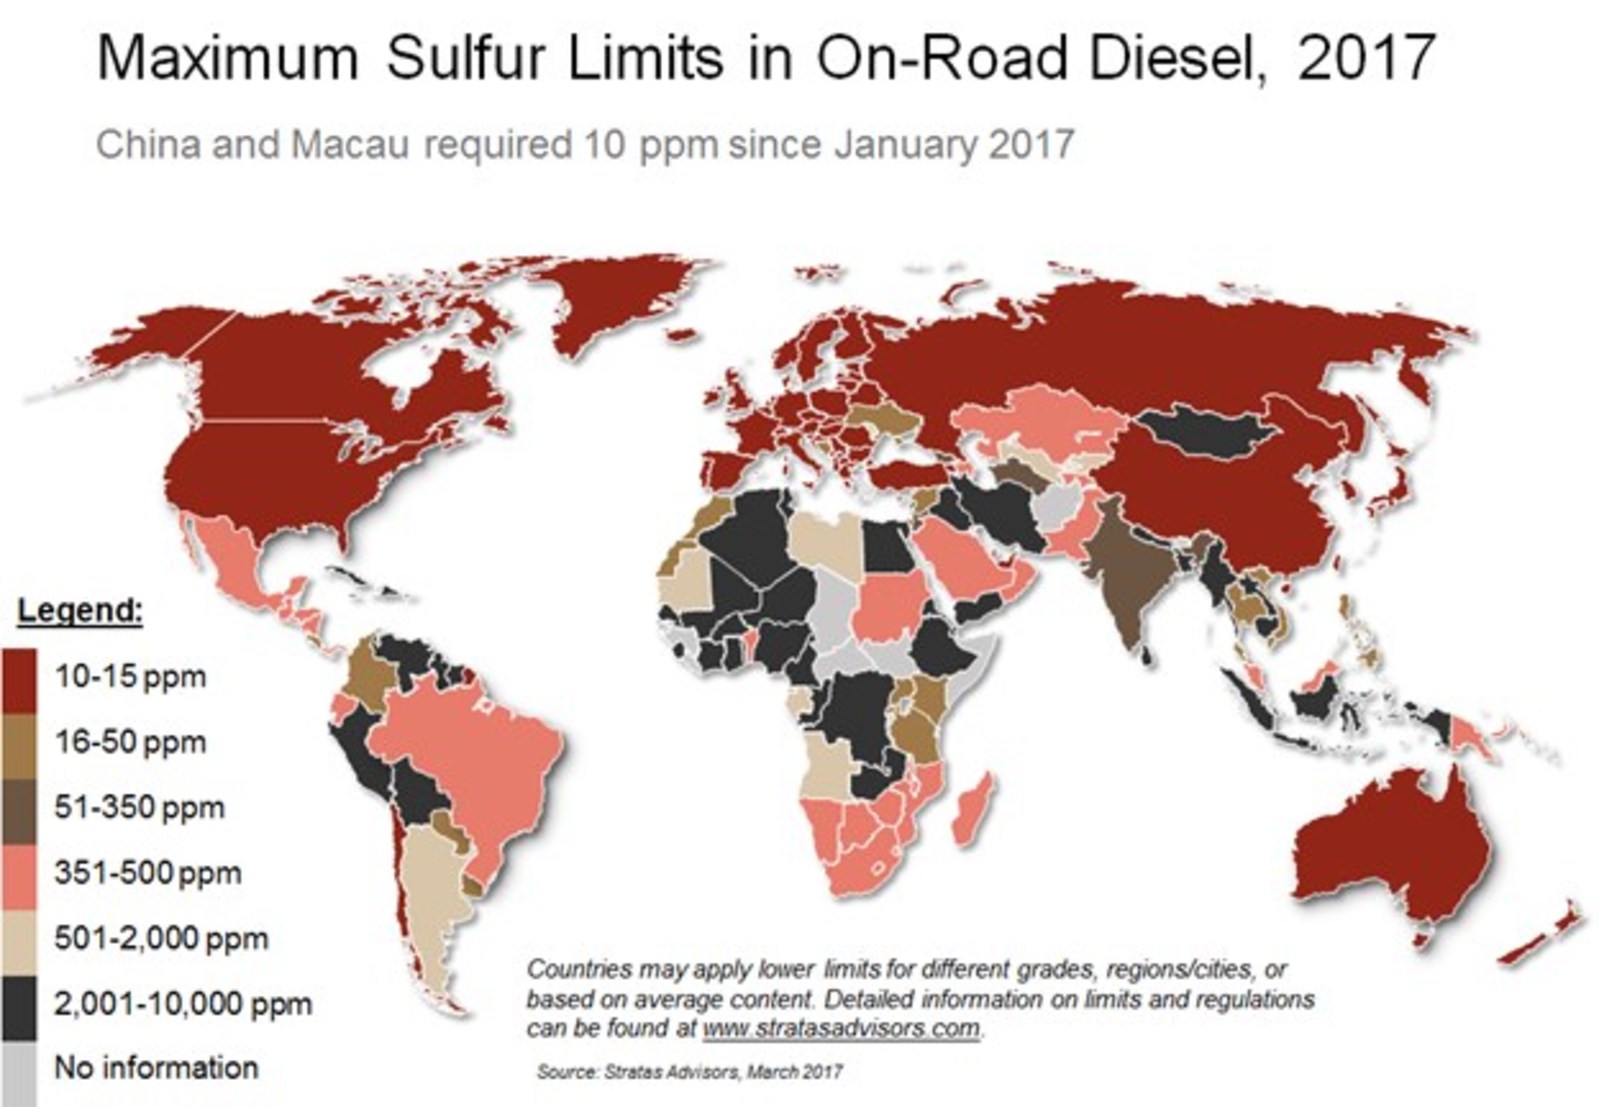 Maximum sulfur limits in on-road diesel